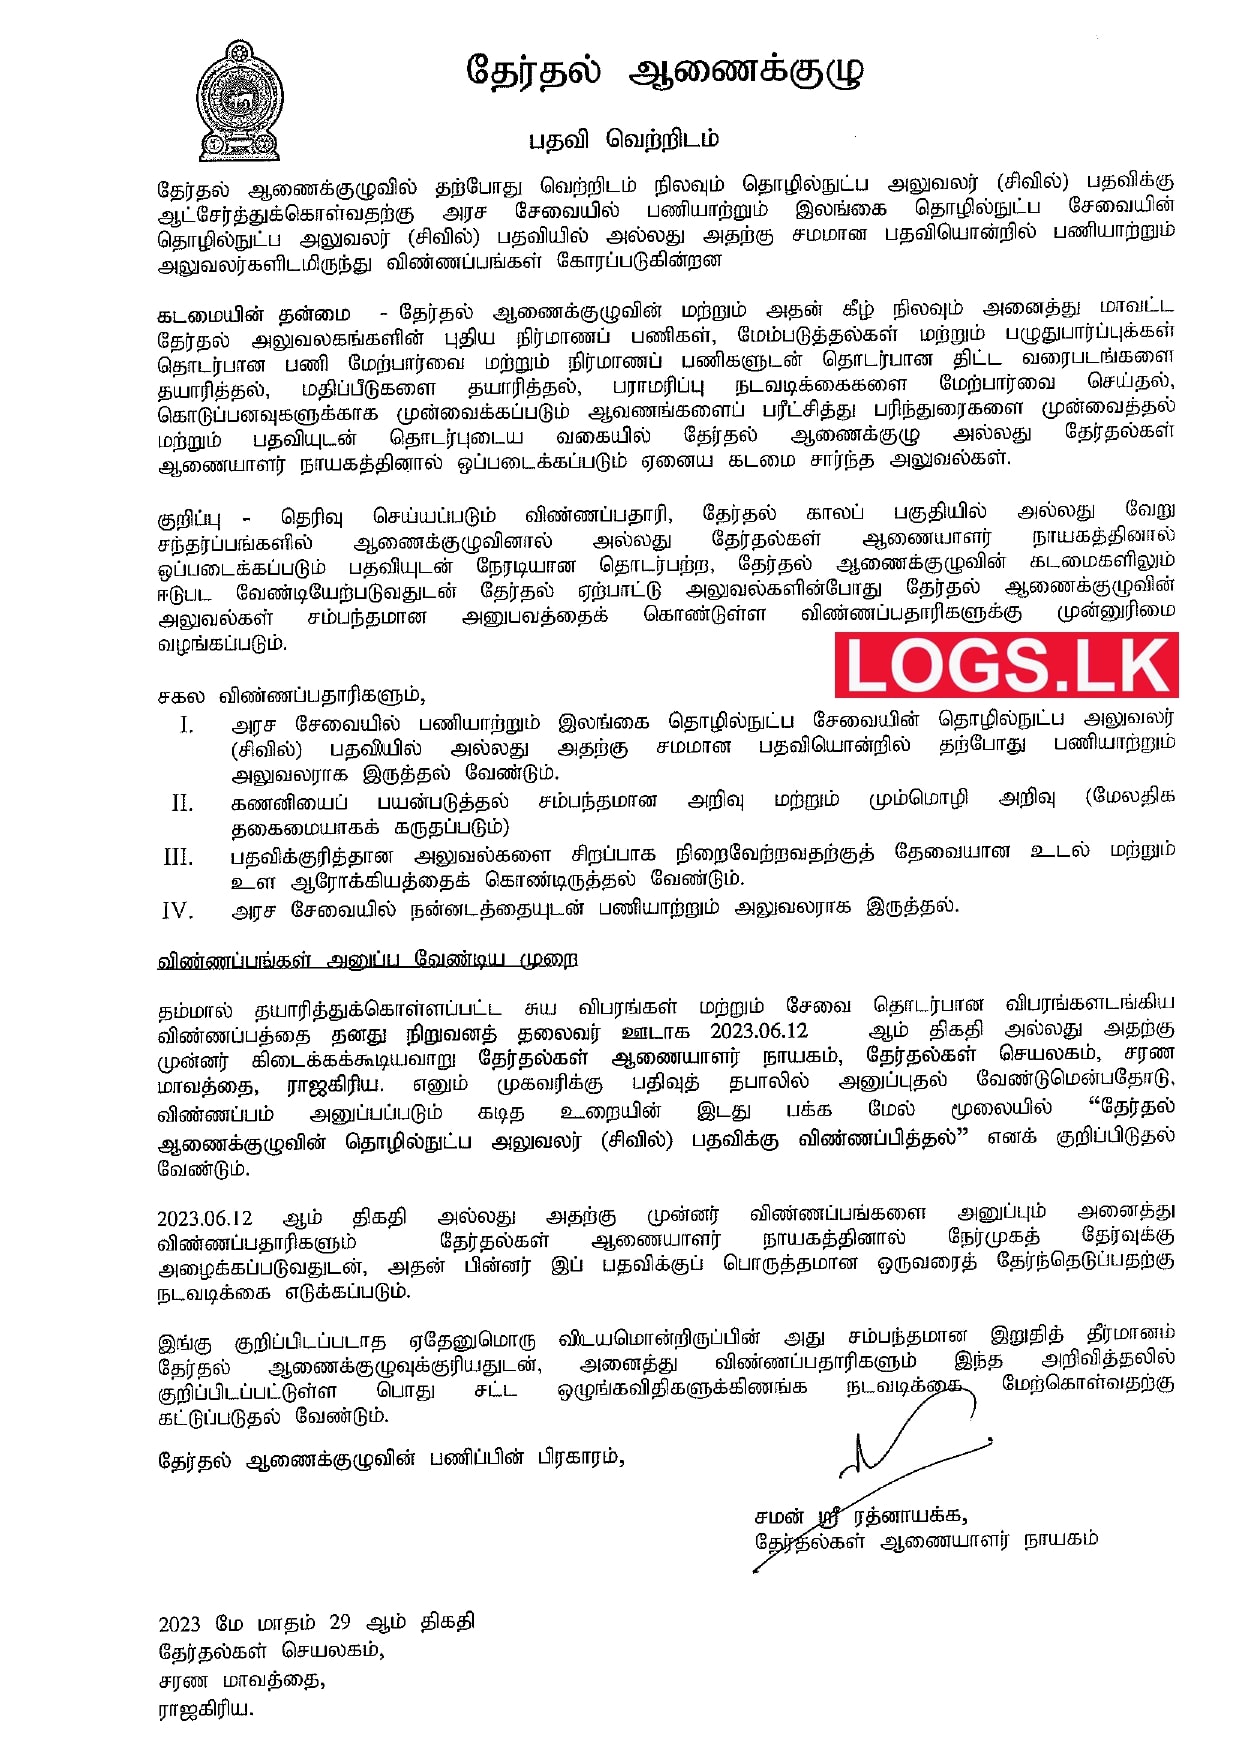 Election Commission of Sri Lanka Technical Officer (Civil) Job Vacancy 2023 Application